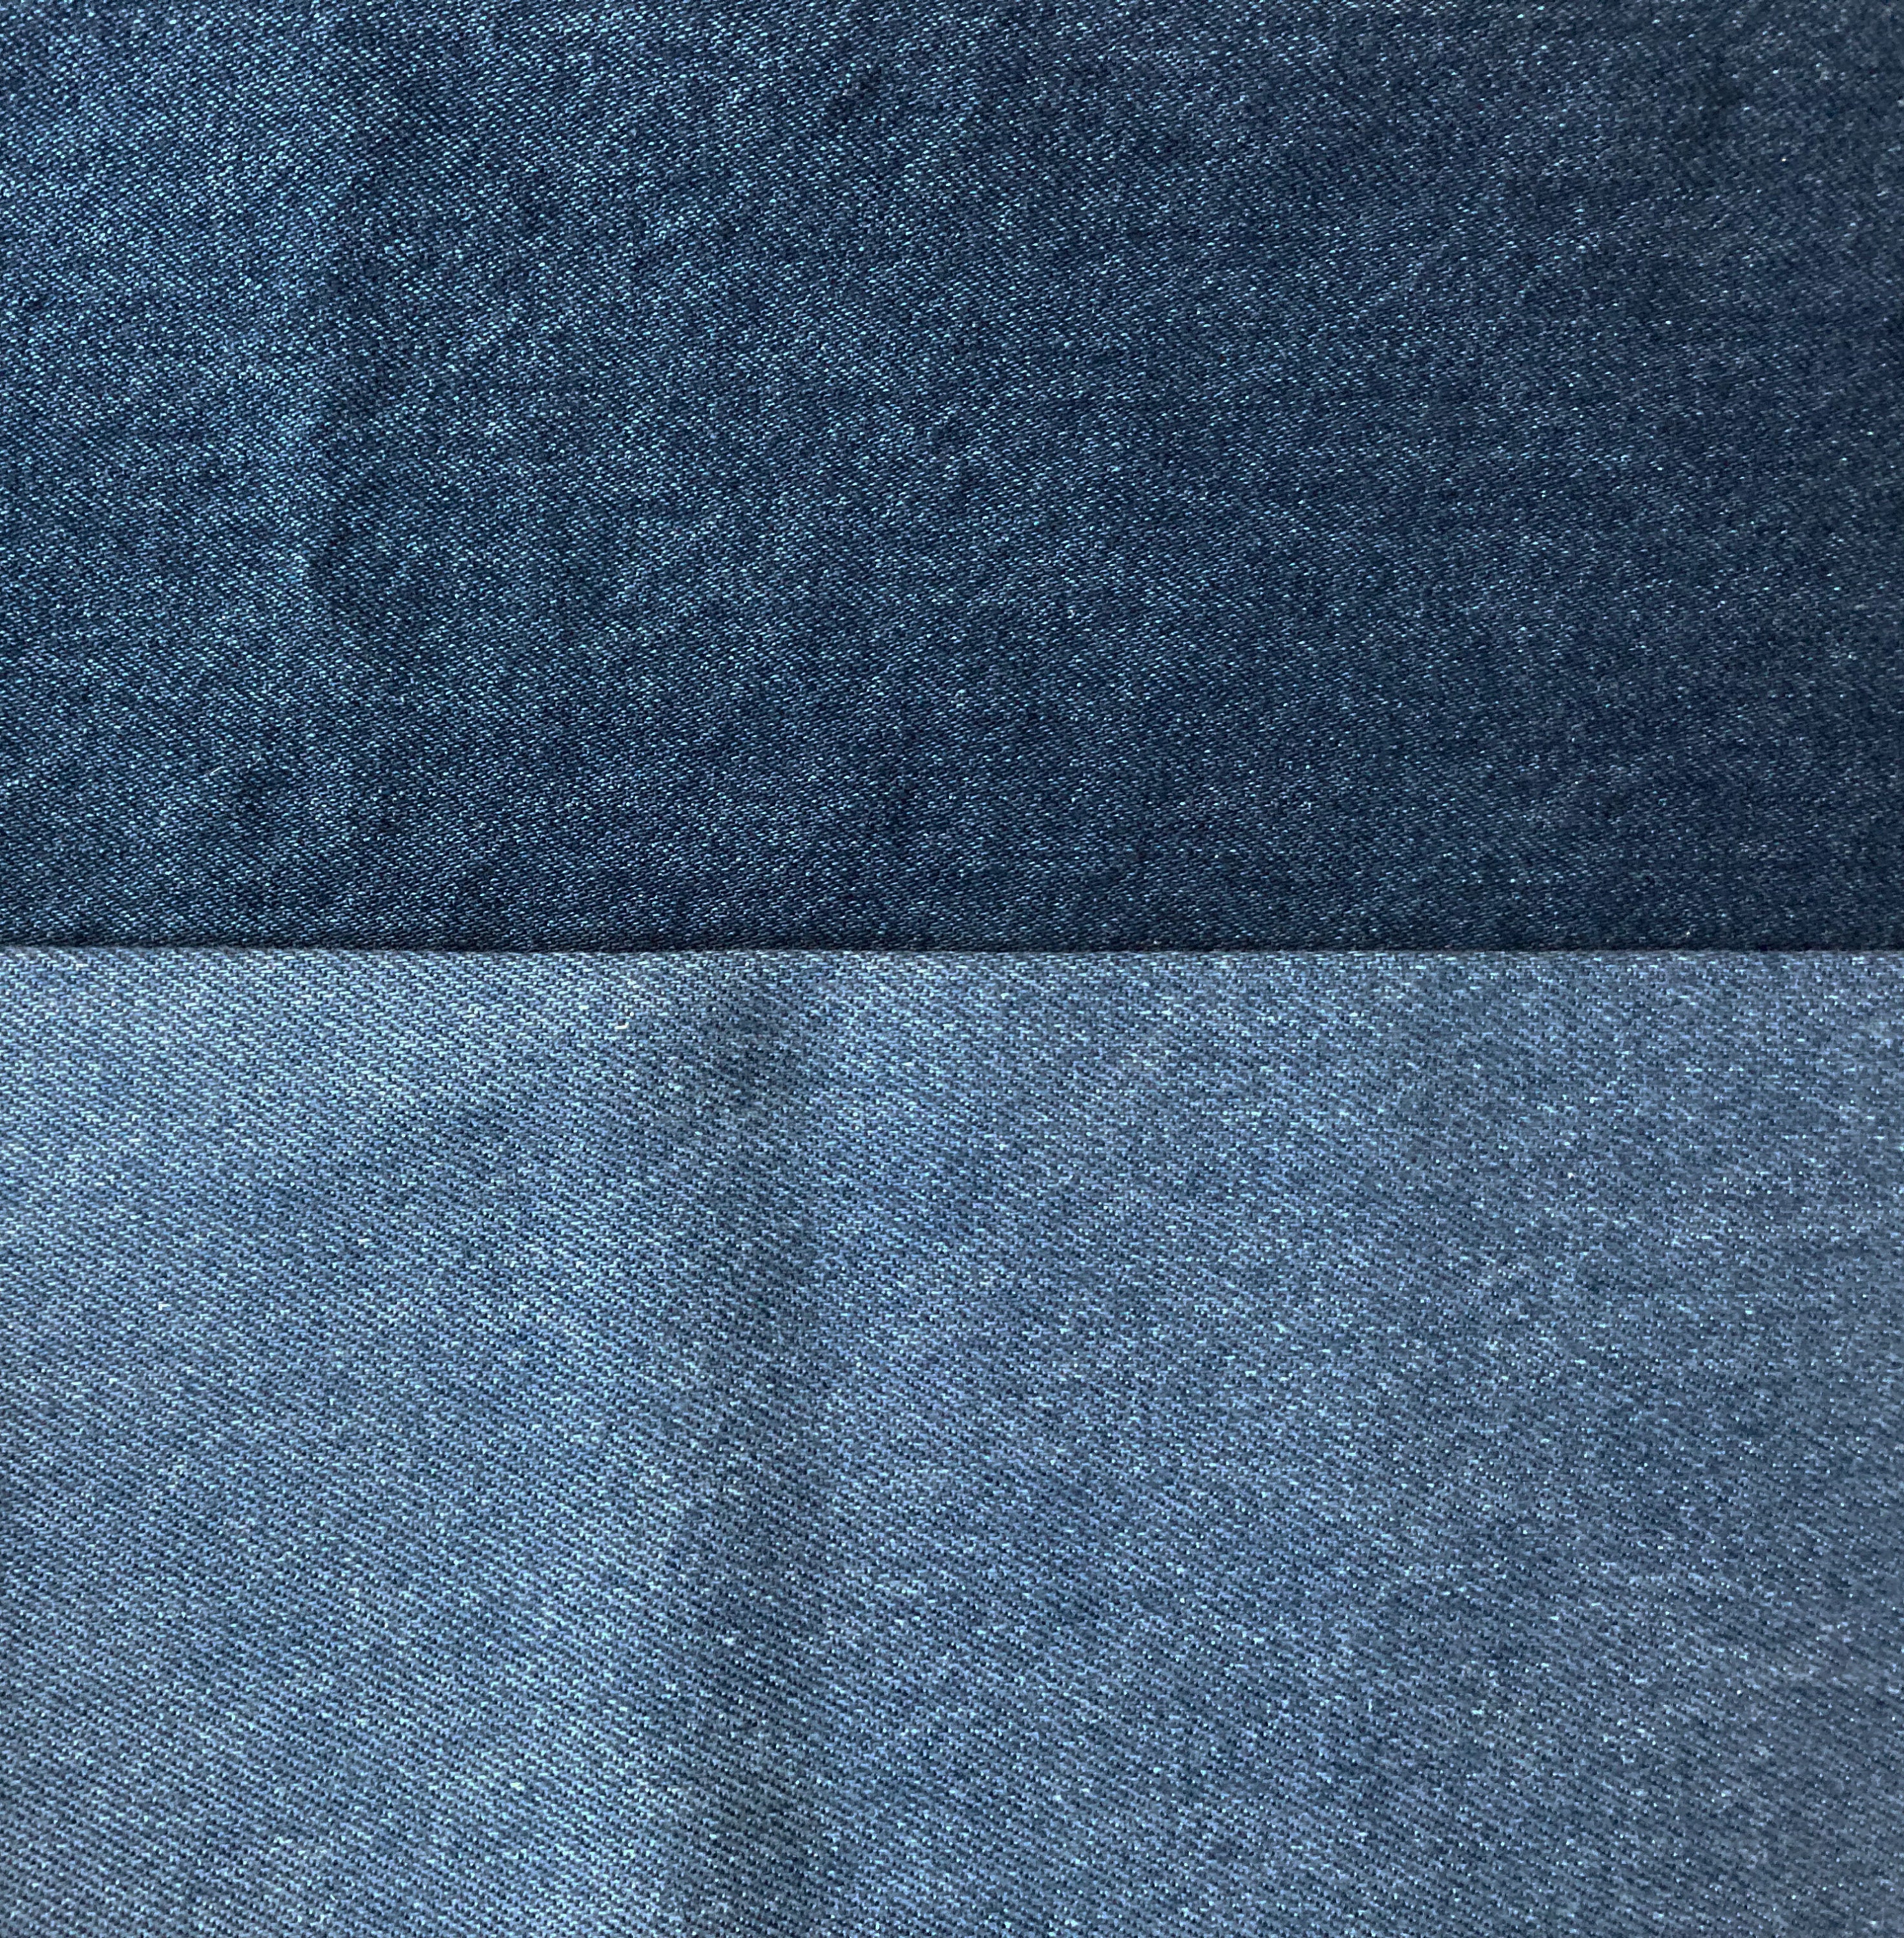 Denim Fabric, Washed Denim in Dark Blue, Light Blue 20oz for